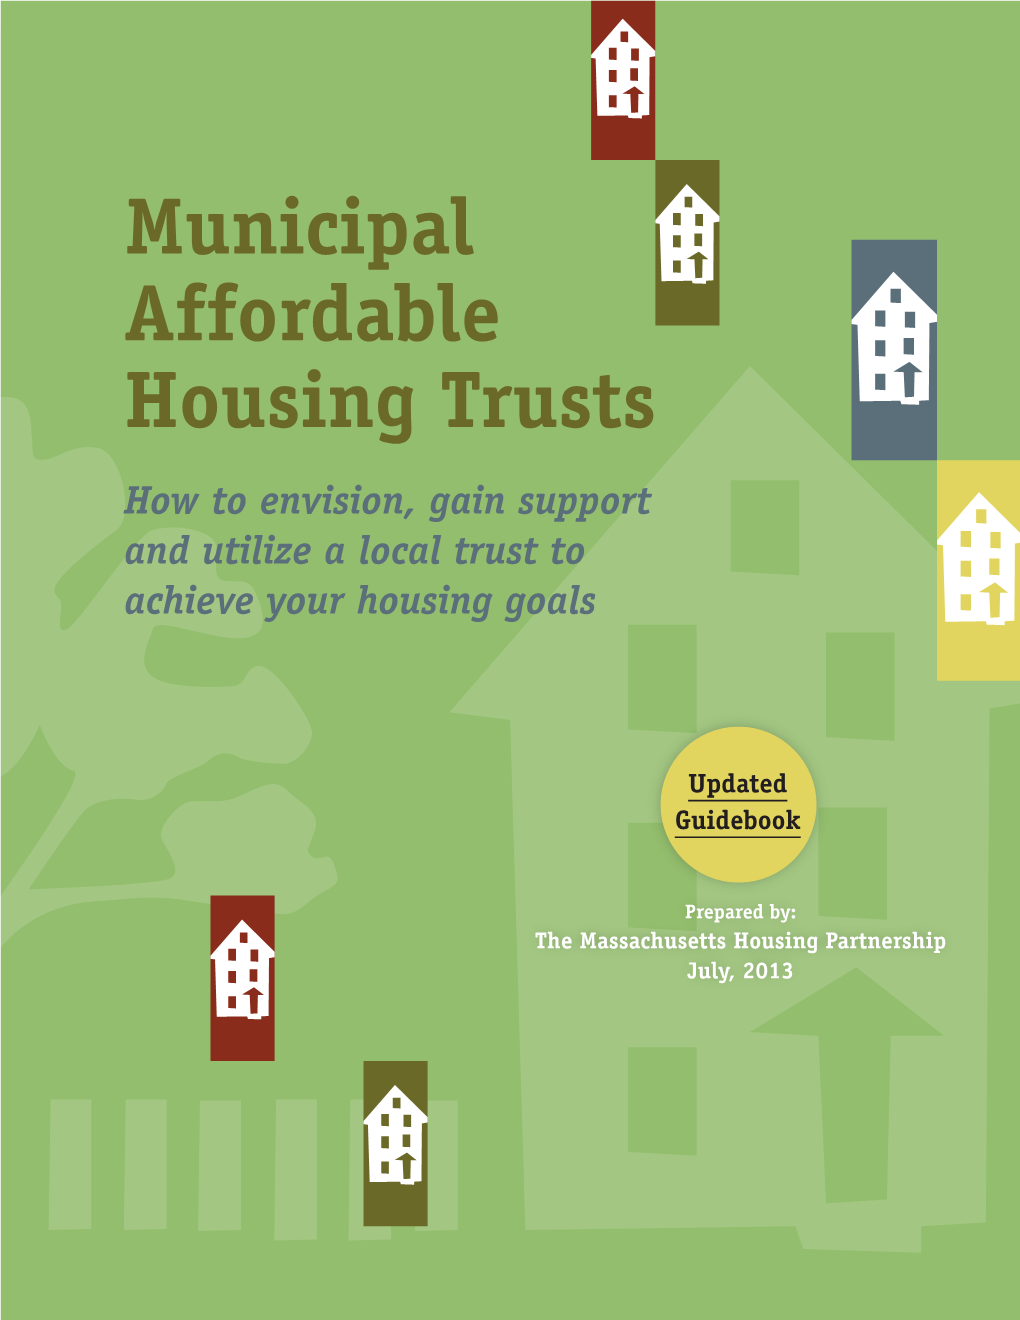 Municipal Affordable Housing Trust Guidebook